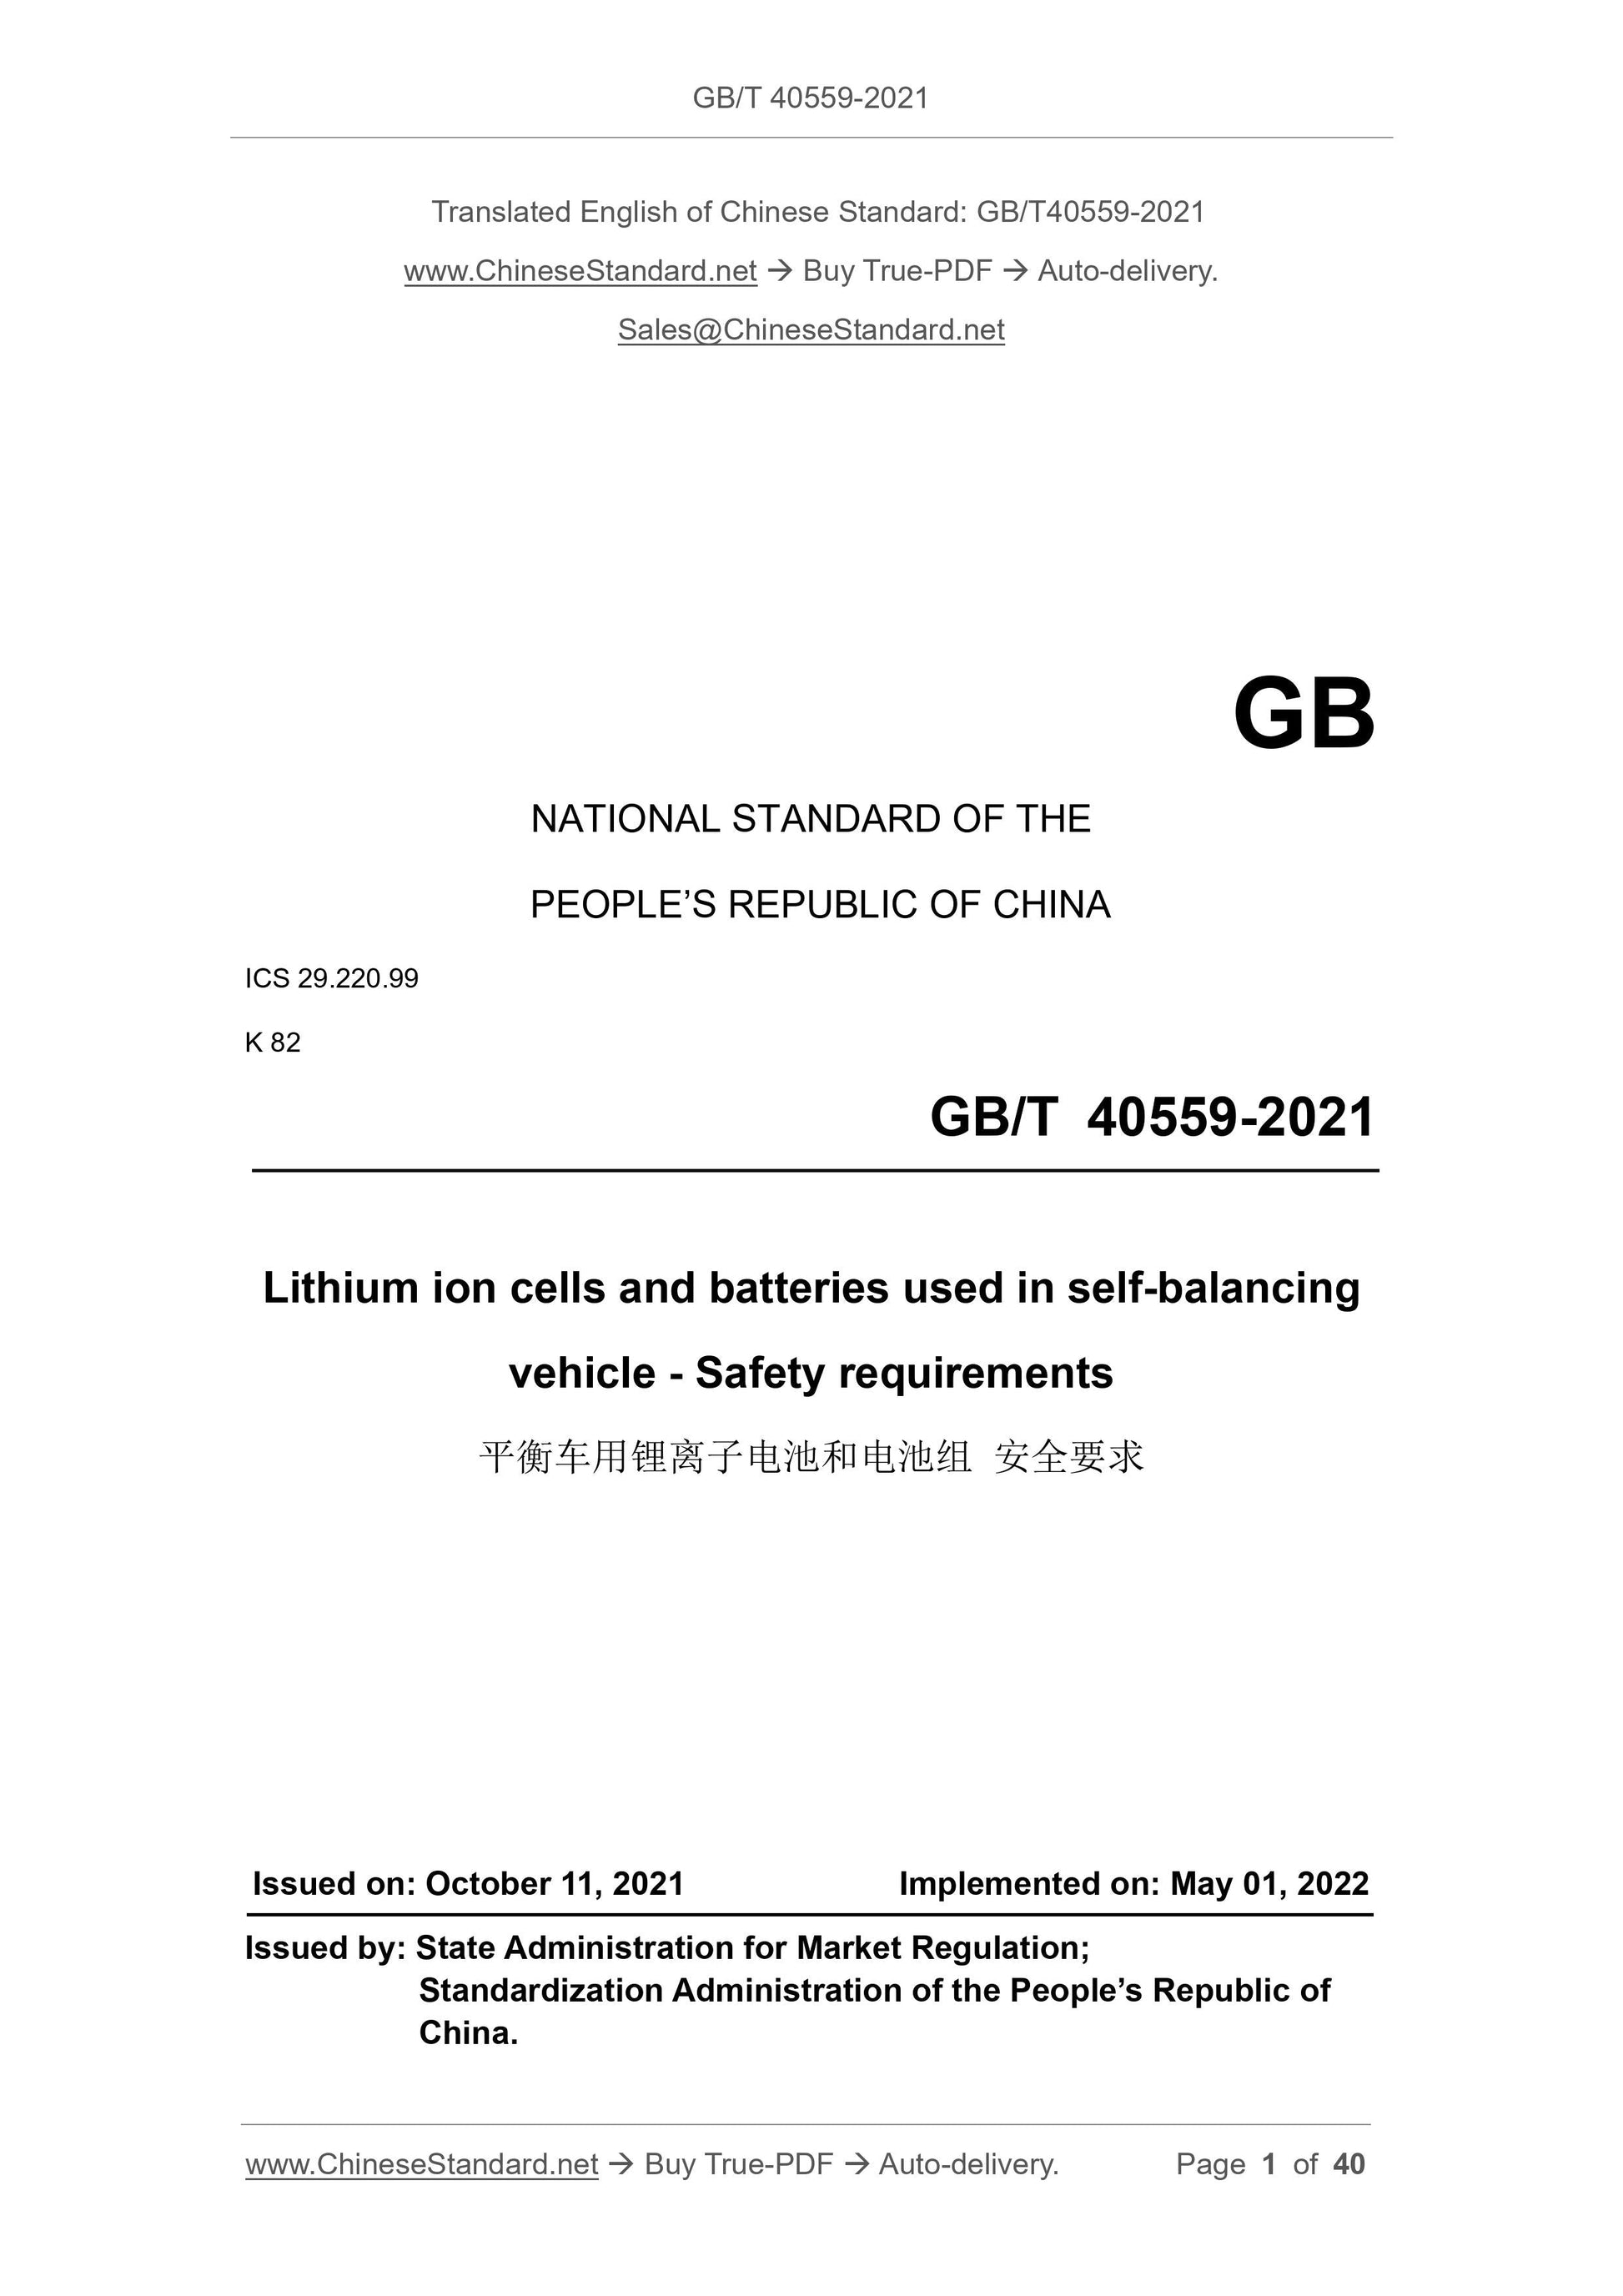 GBT40559-2021 Page 1